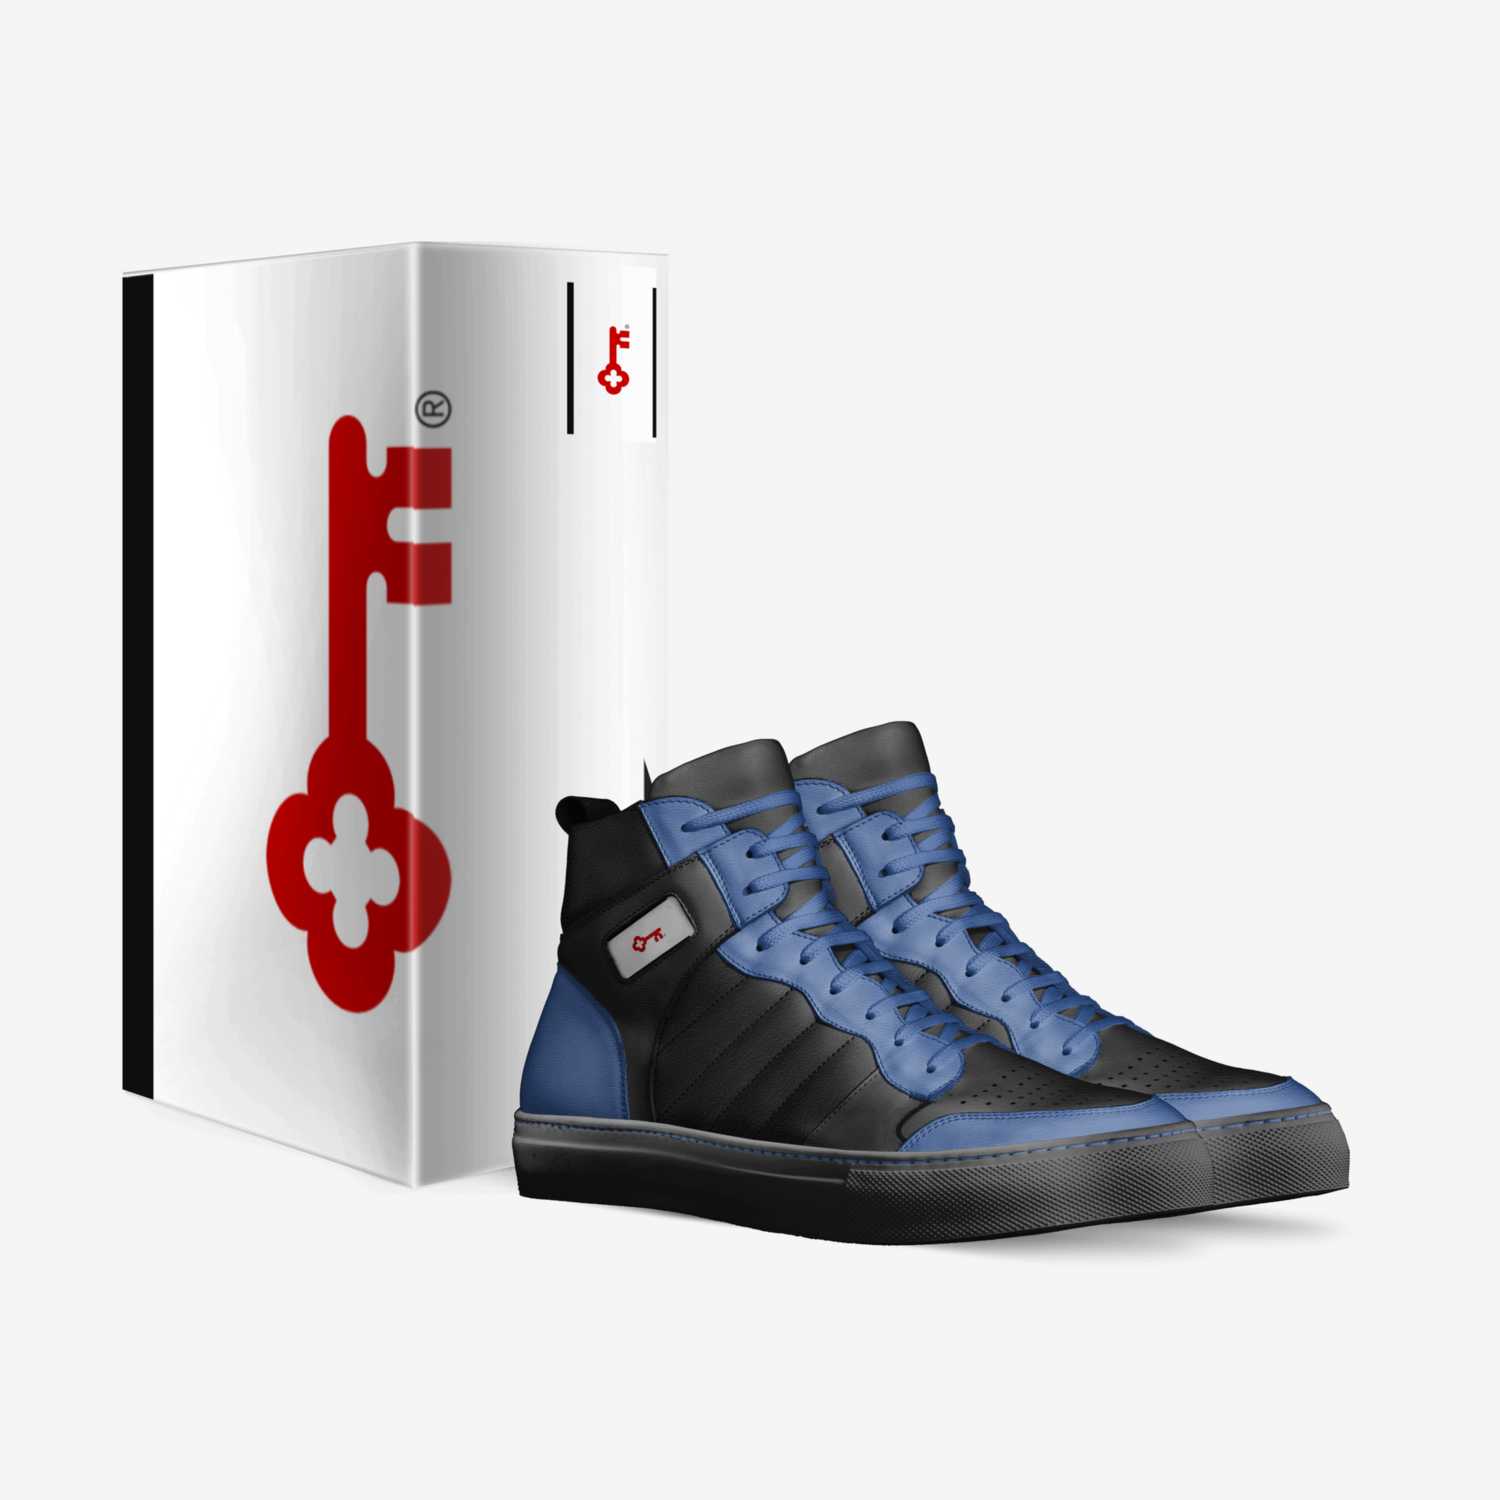 Key 1's custom made in Italy shoes by Keyandre Mcdonald | Box view